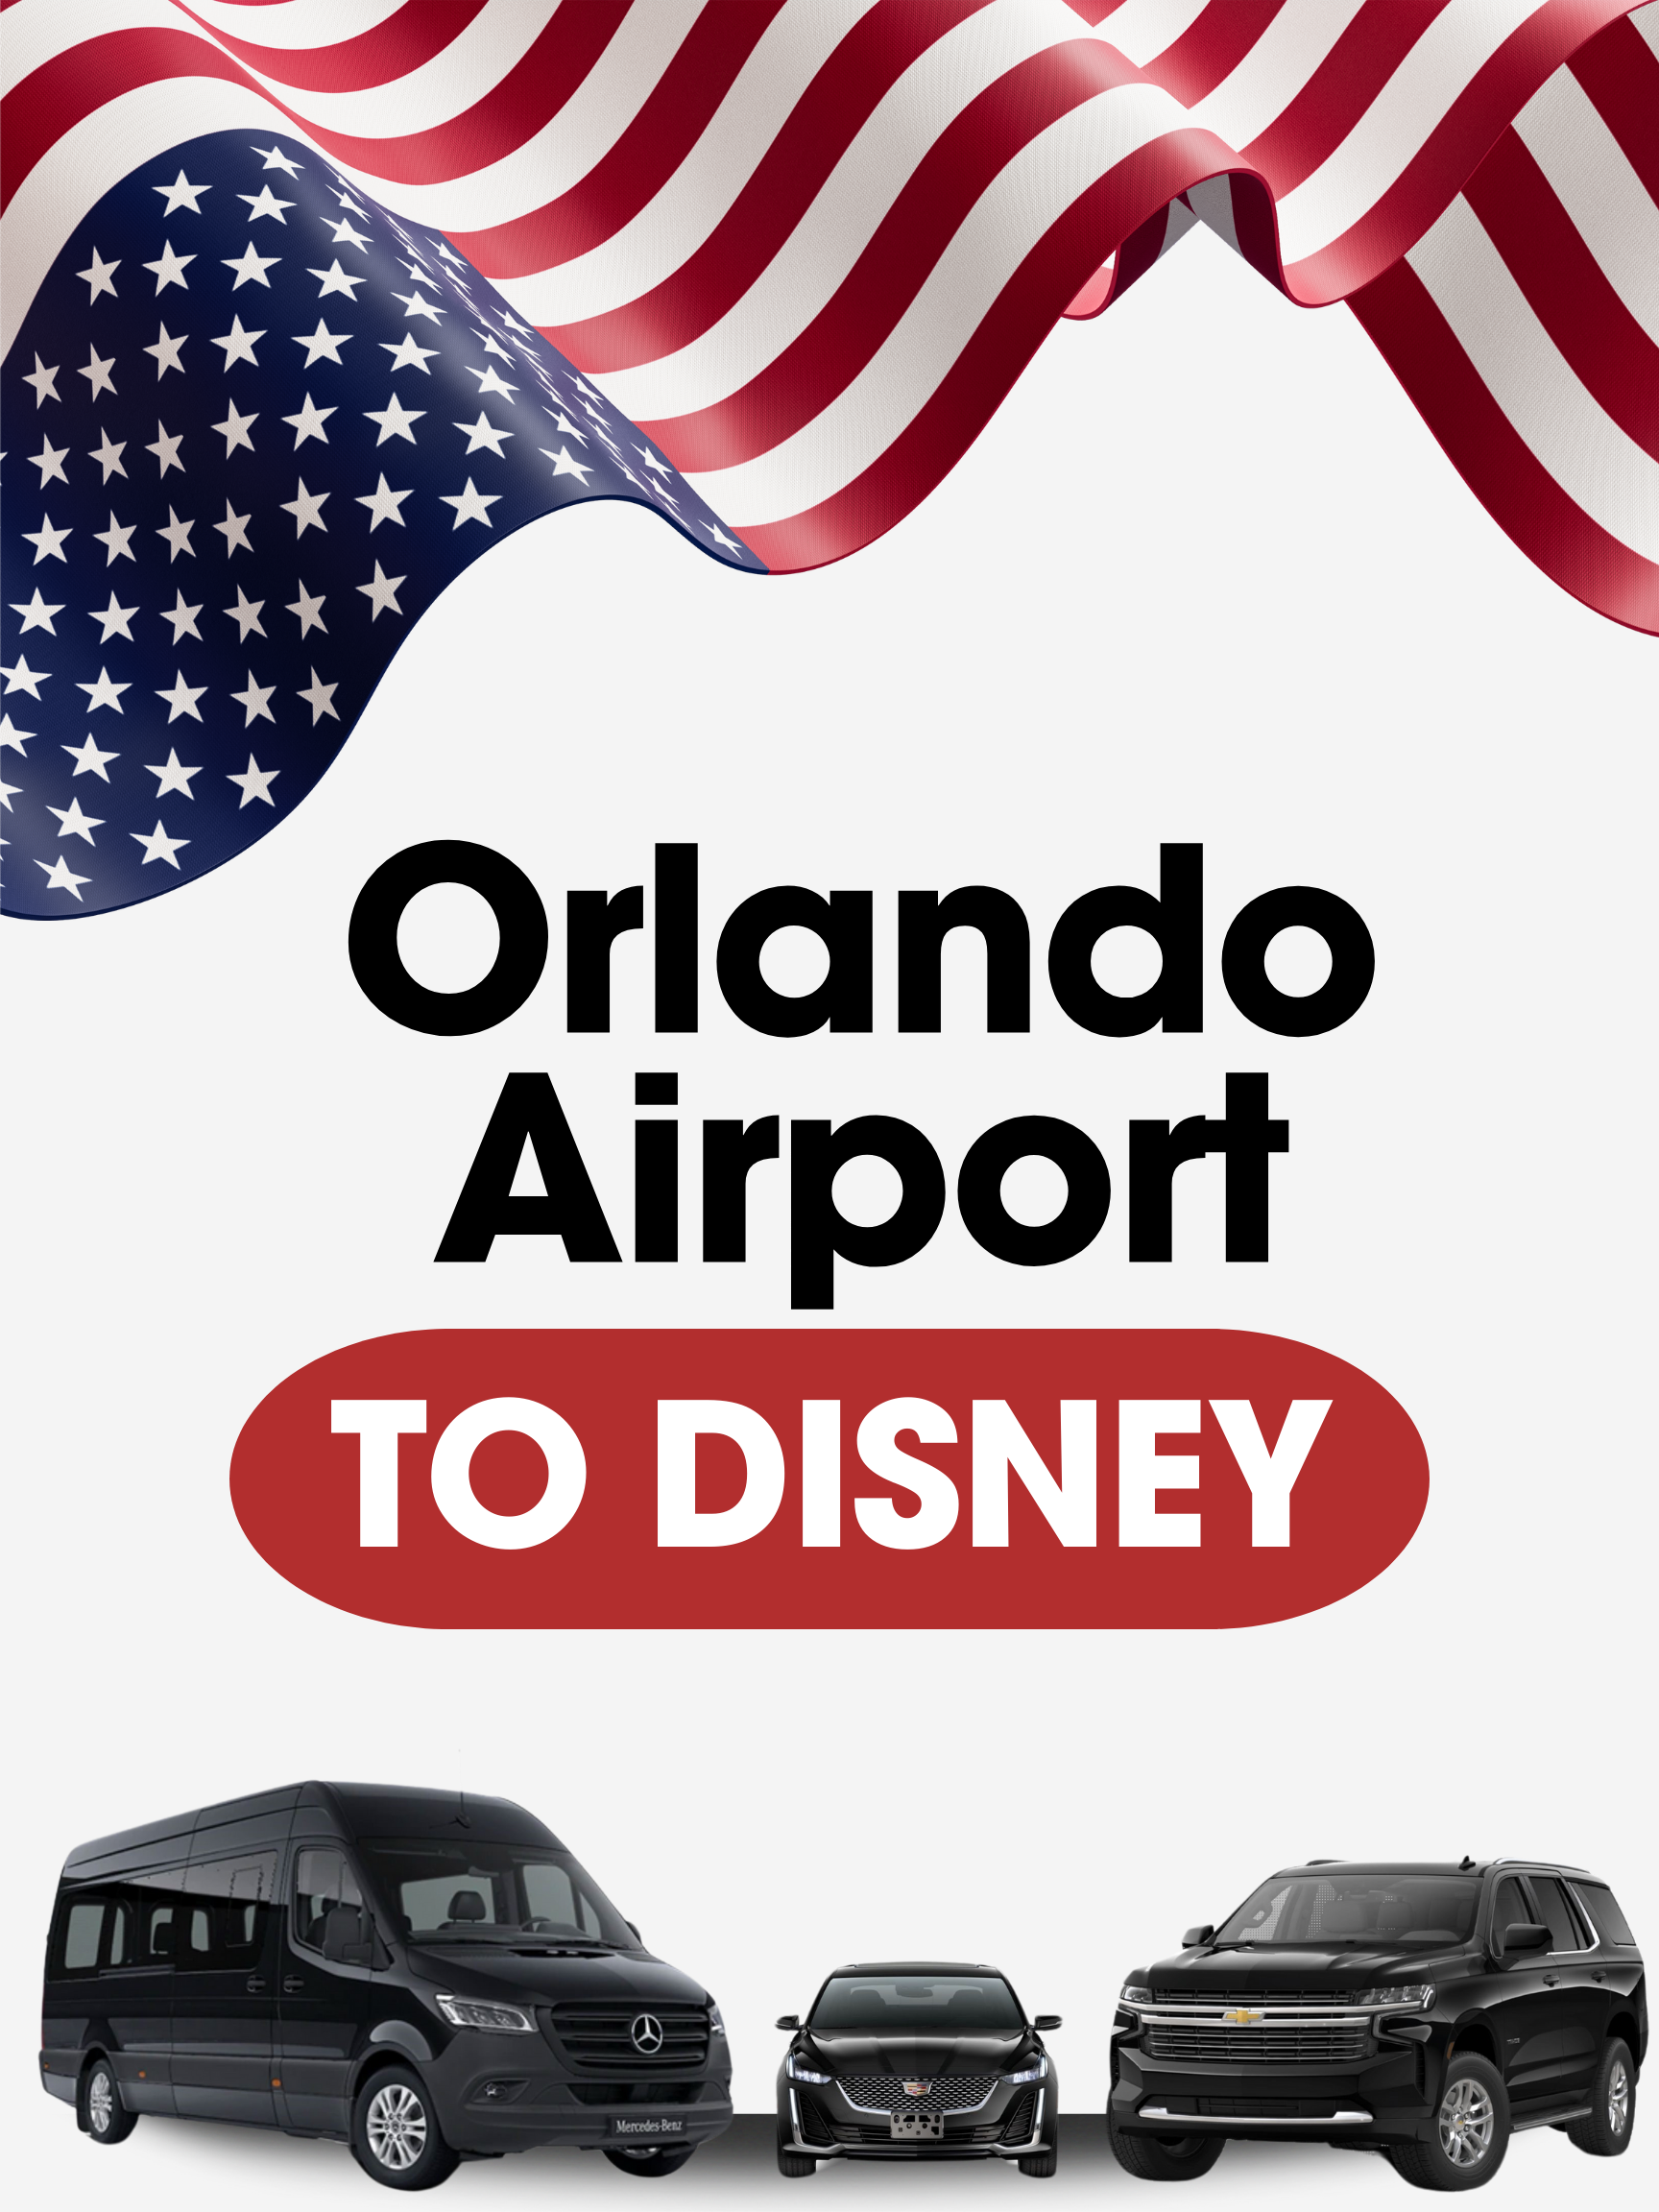 Orlando Airport to Disney